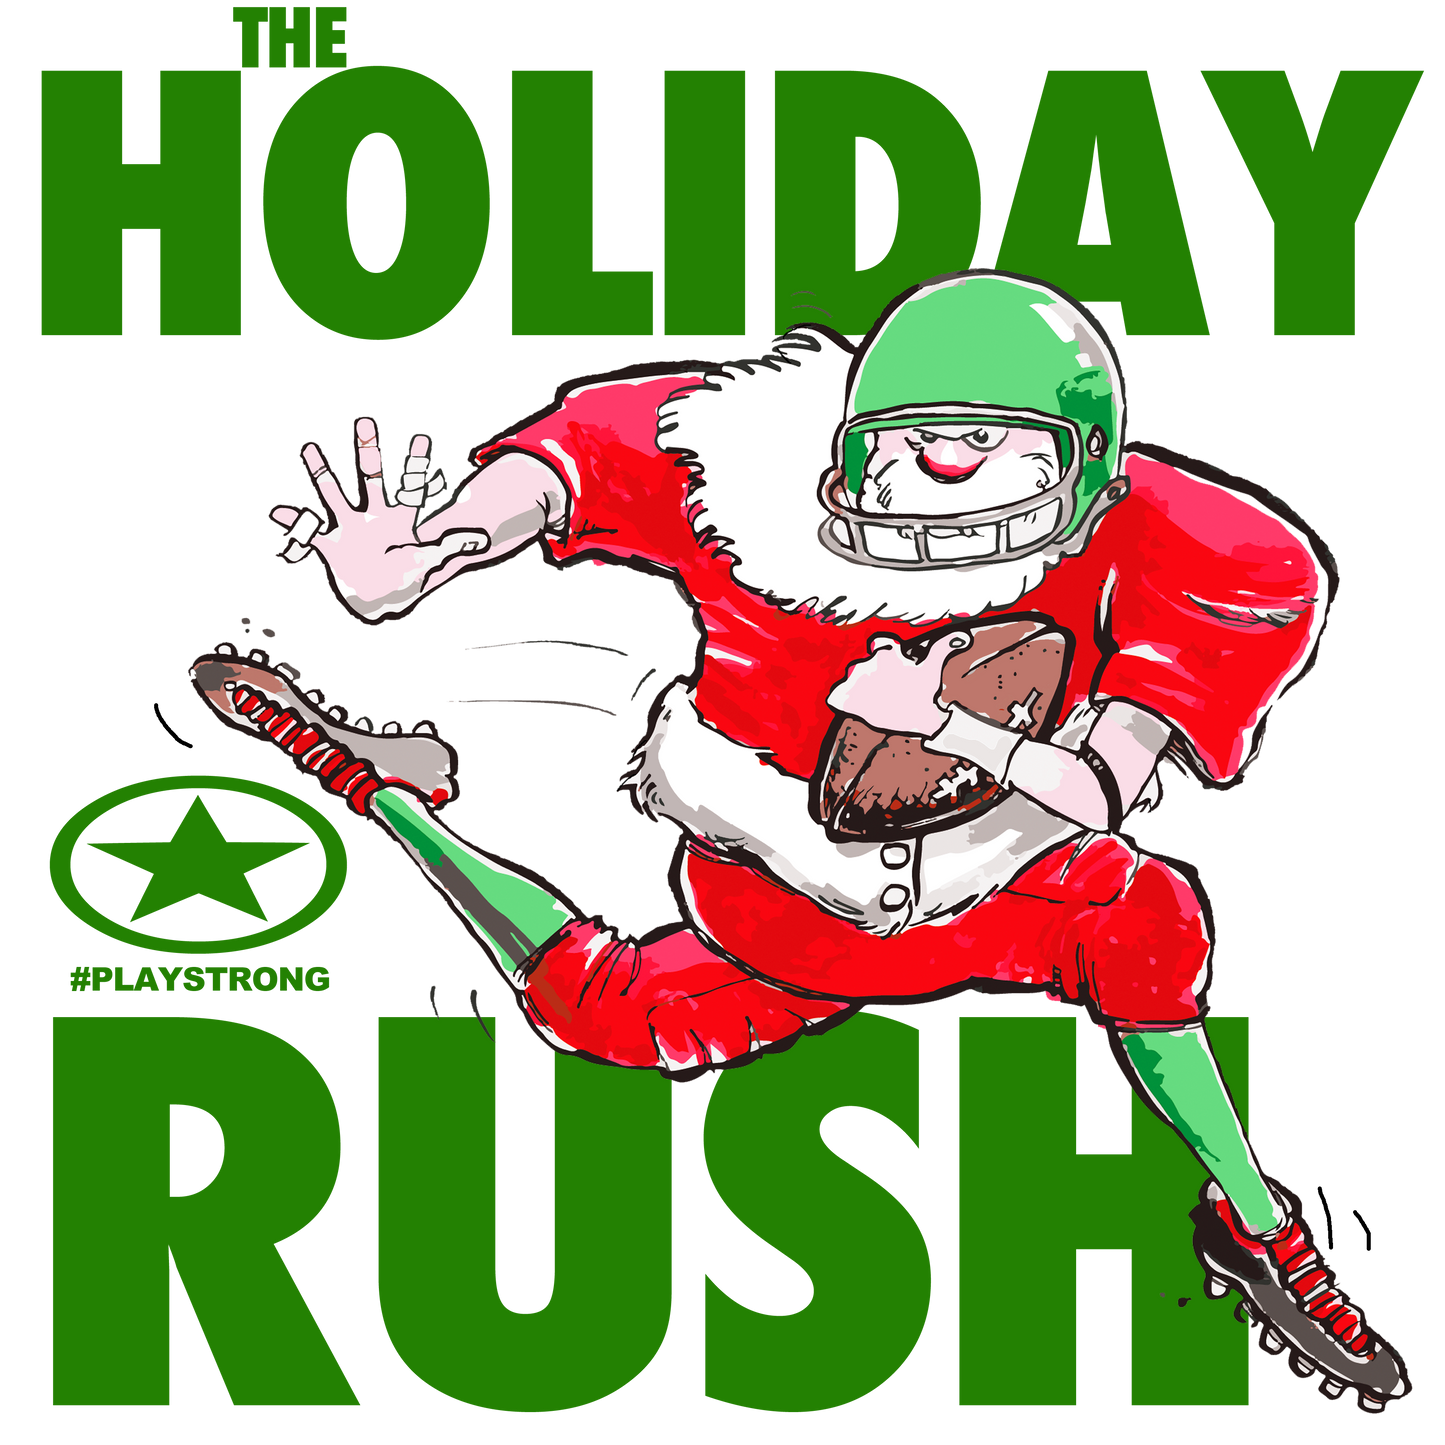 THE HOLIDAY RUSH Santa Sports #playstrong Short-Sleeve Unisex T-Shirt